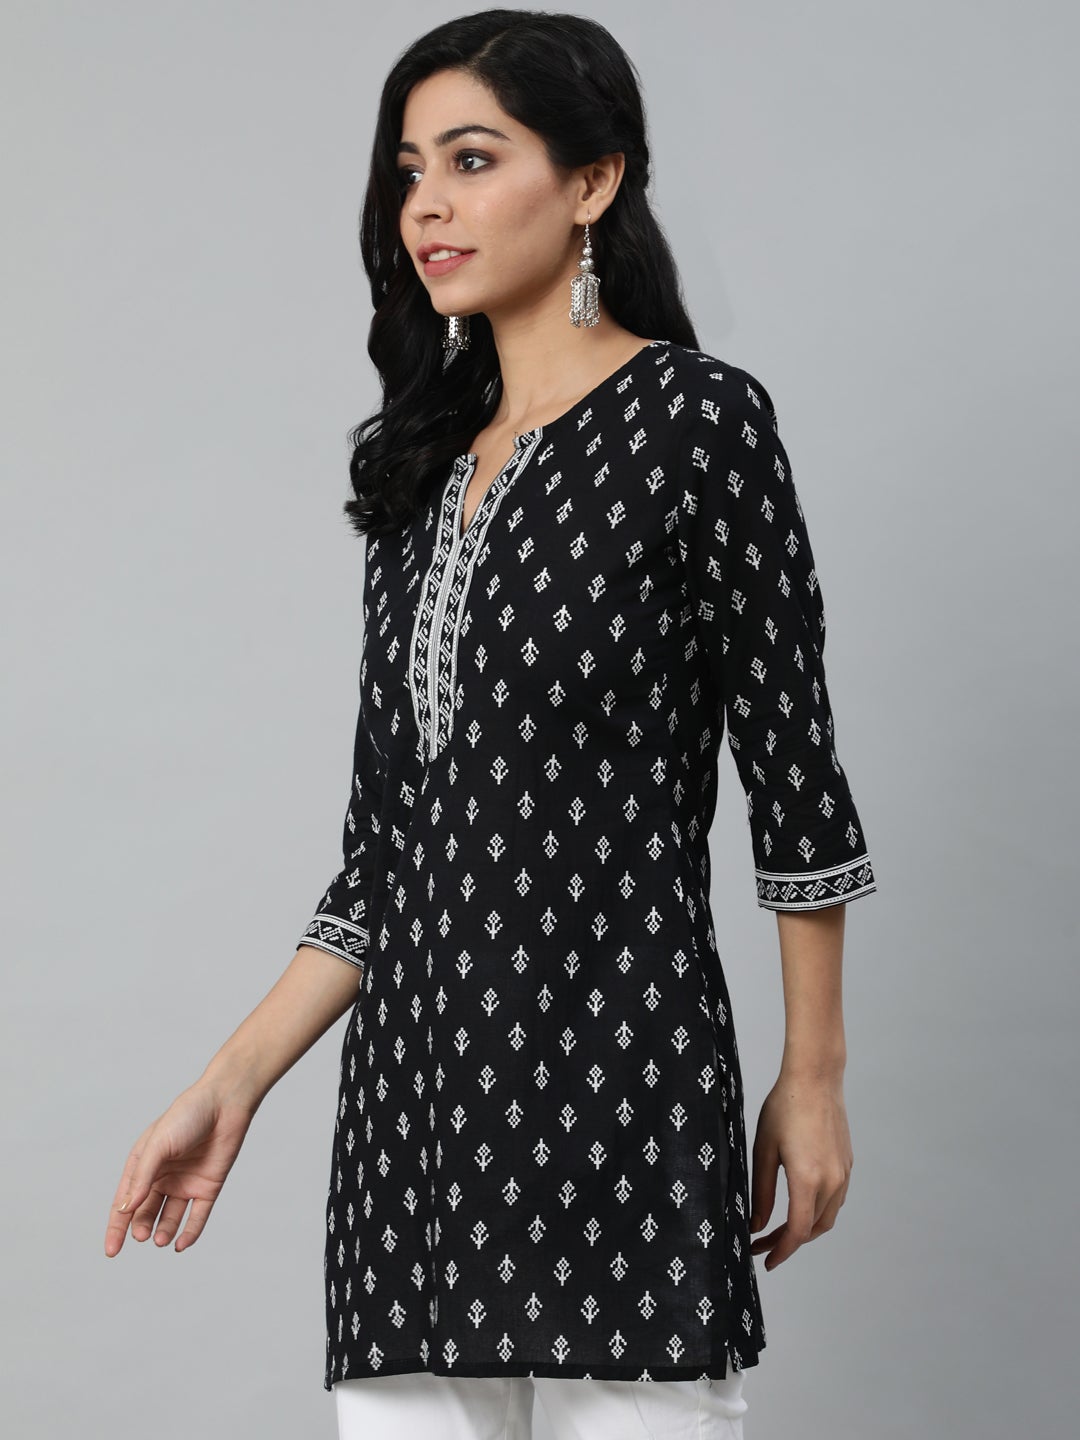 Women's Black & White Printed Cotton Tunic - Nayo Clothing